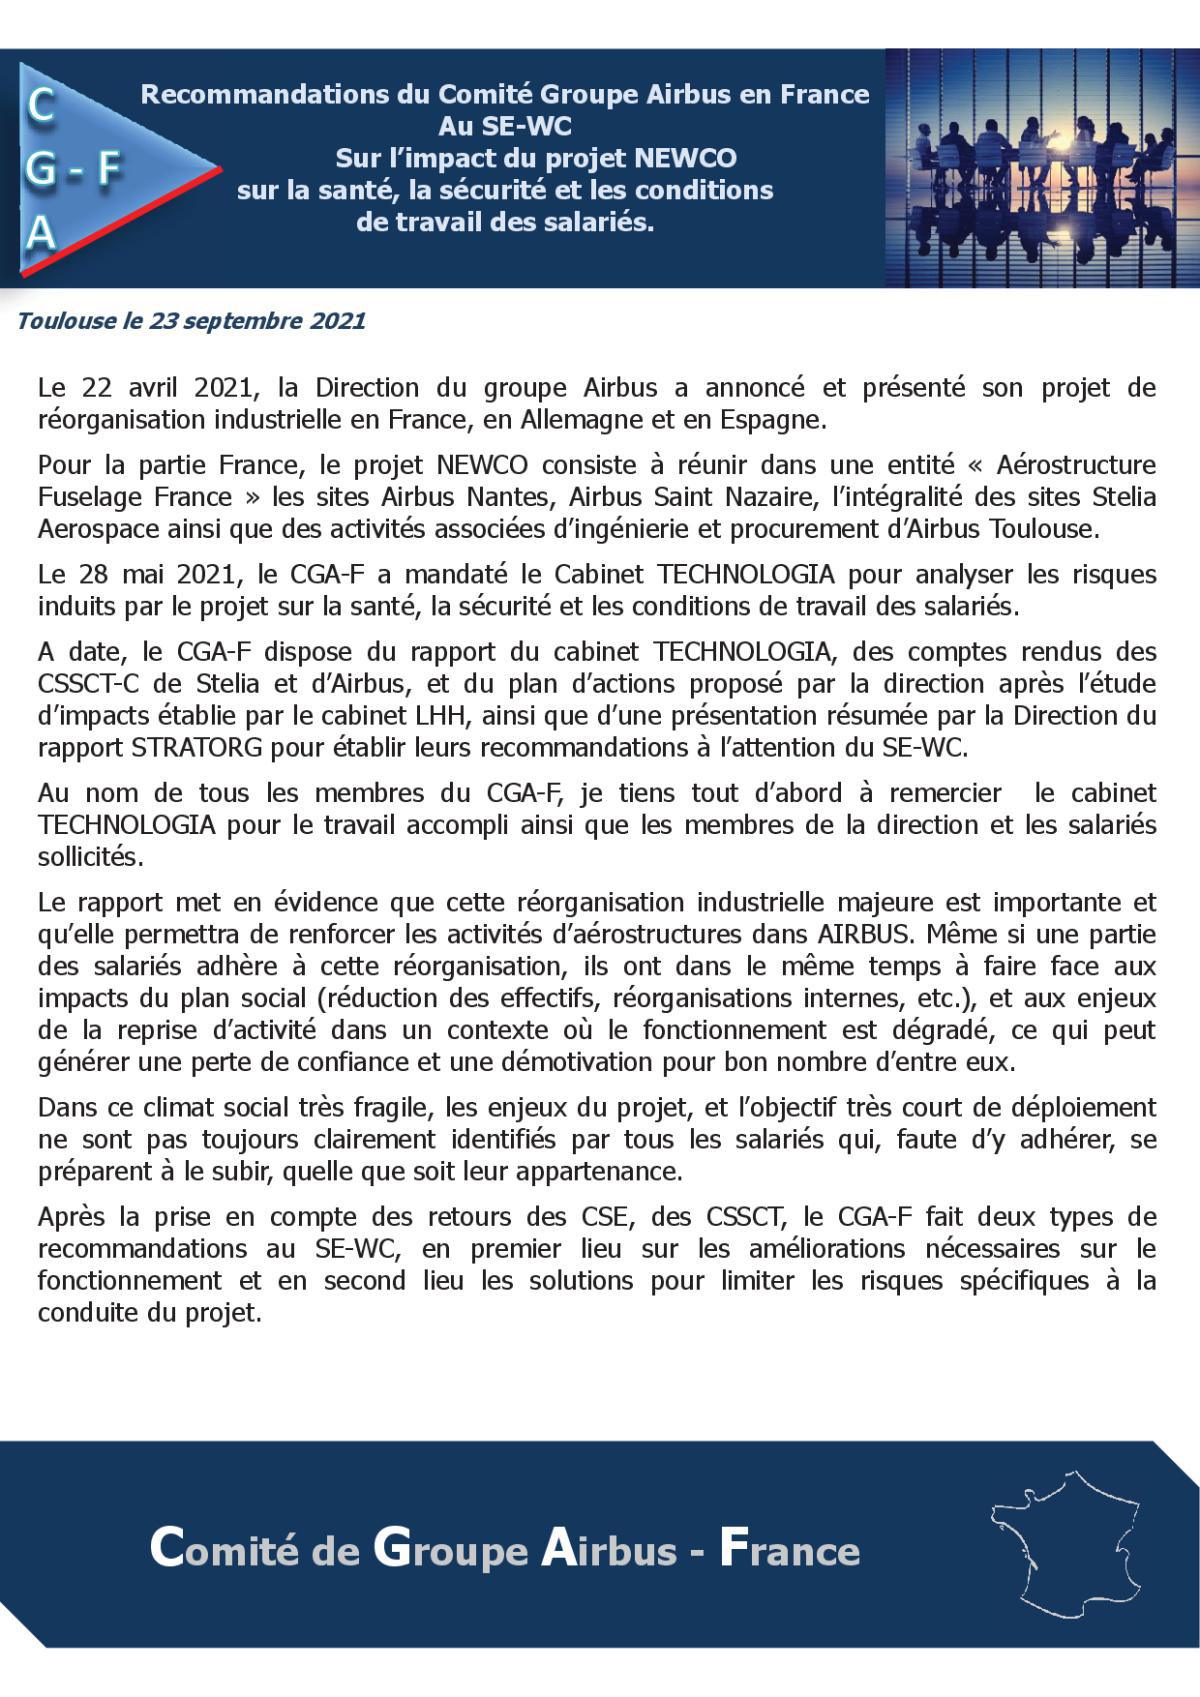 Comité Groupe Airbus France - Recommandations du CGA-F vers le SE-WC